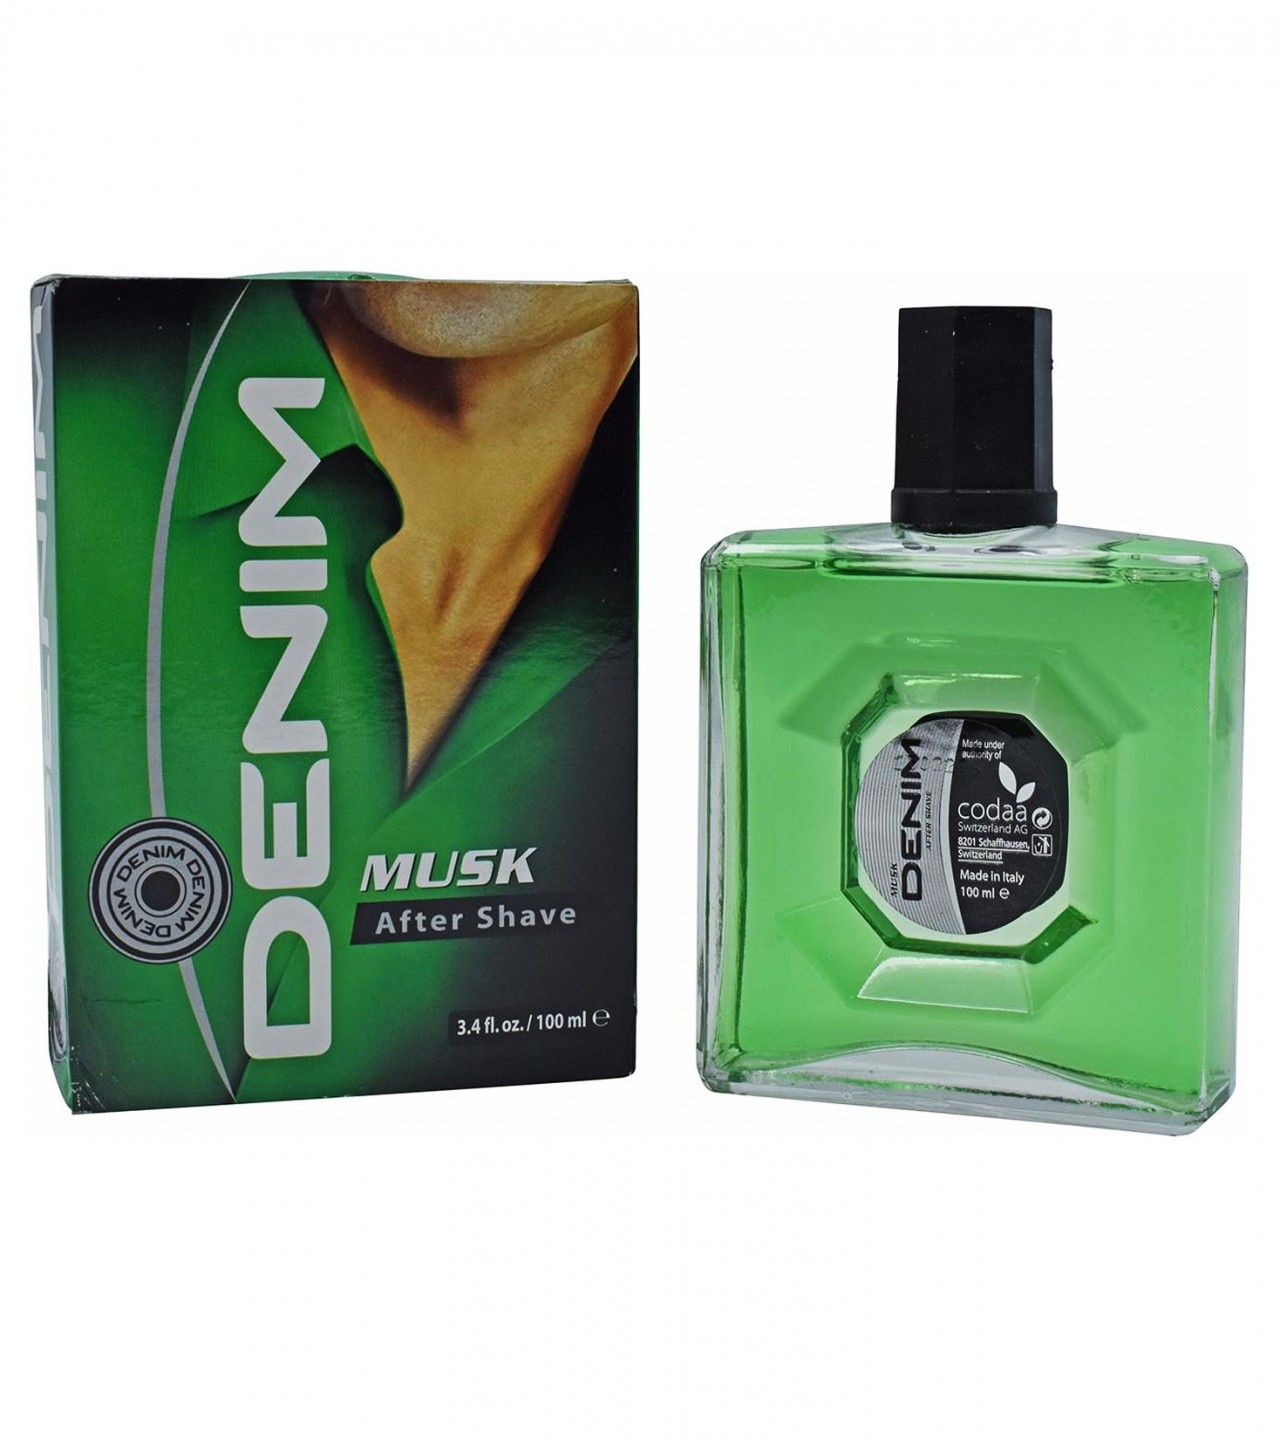 Denim Musk After Shave (Musk) - 100 ml - Green